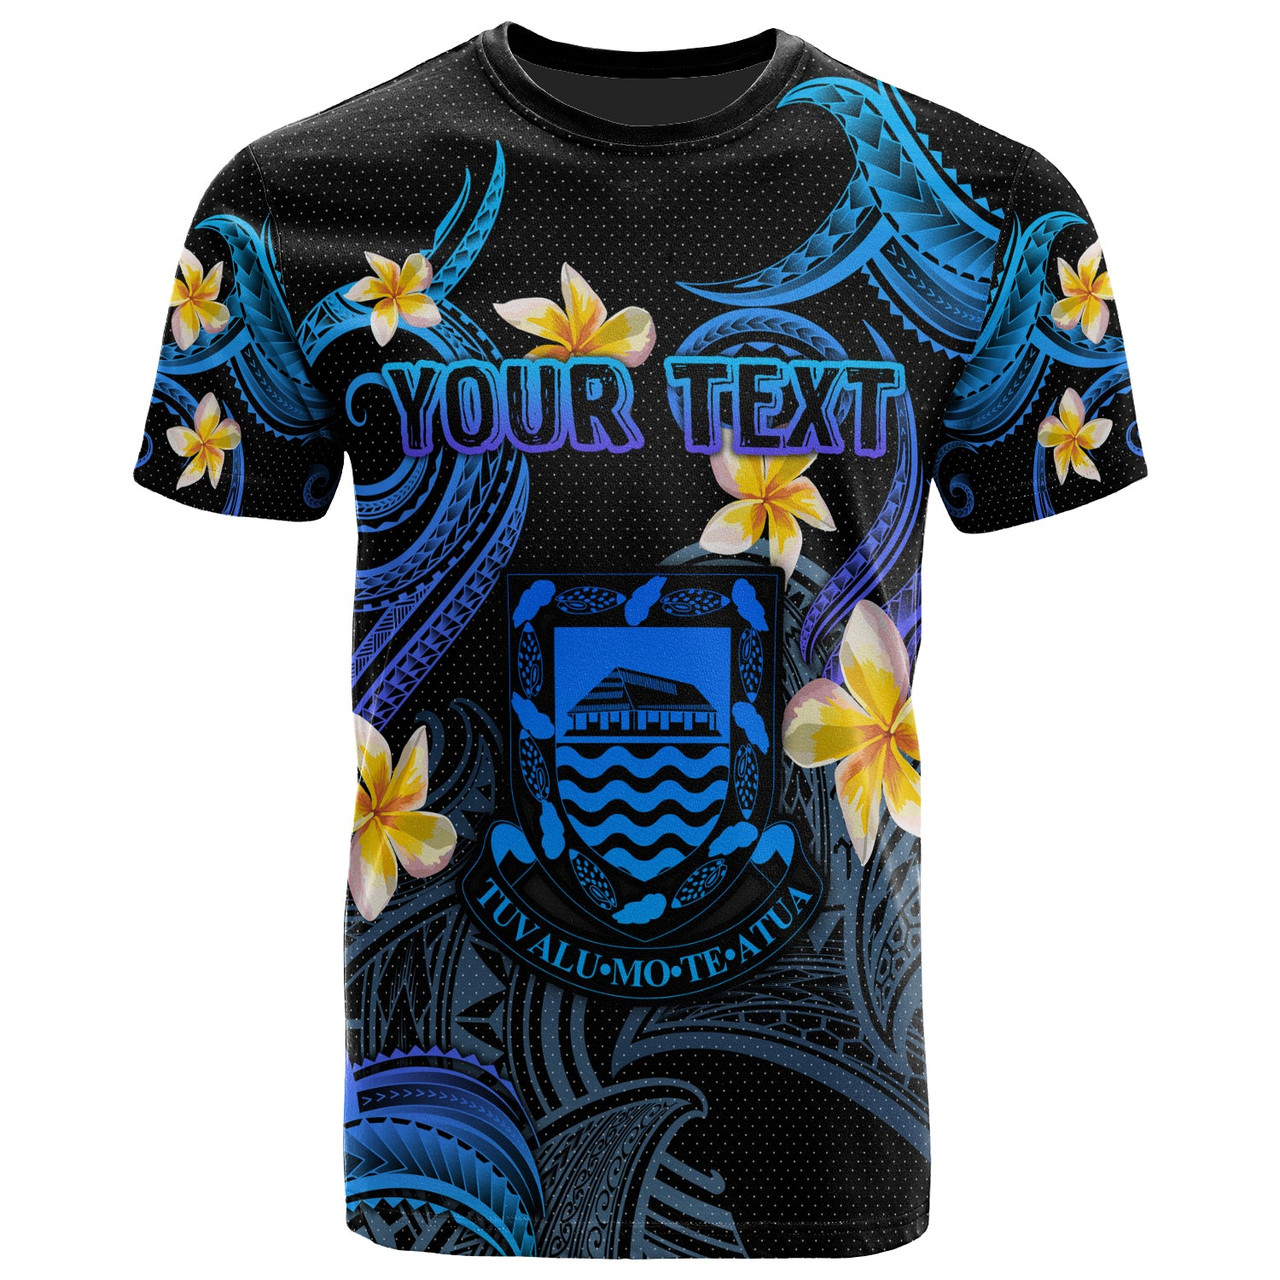 Tuvalu T-shirt - Custom Personalised Polynesian Waves with Plumeria Flowers (Blue)